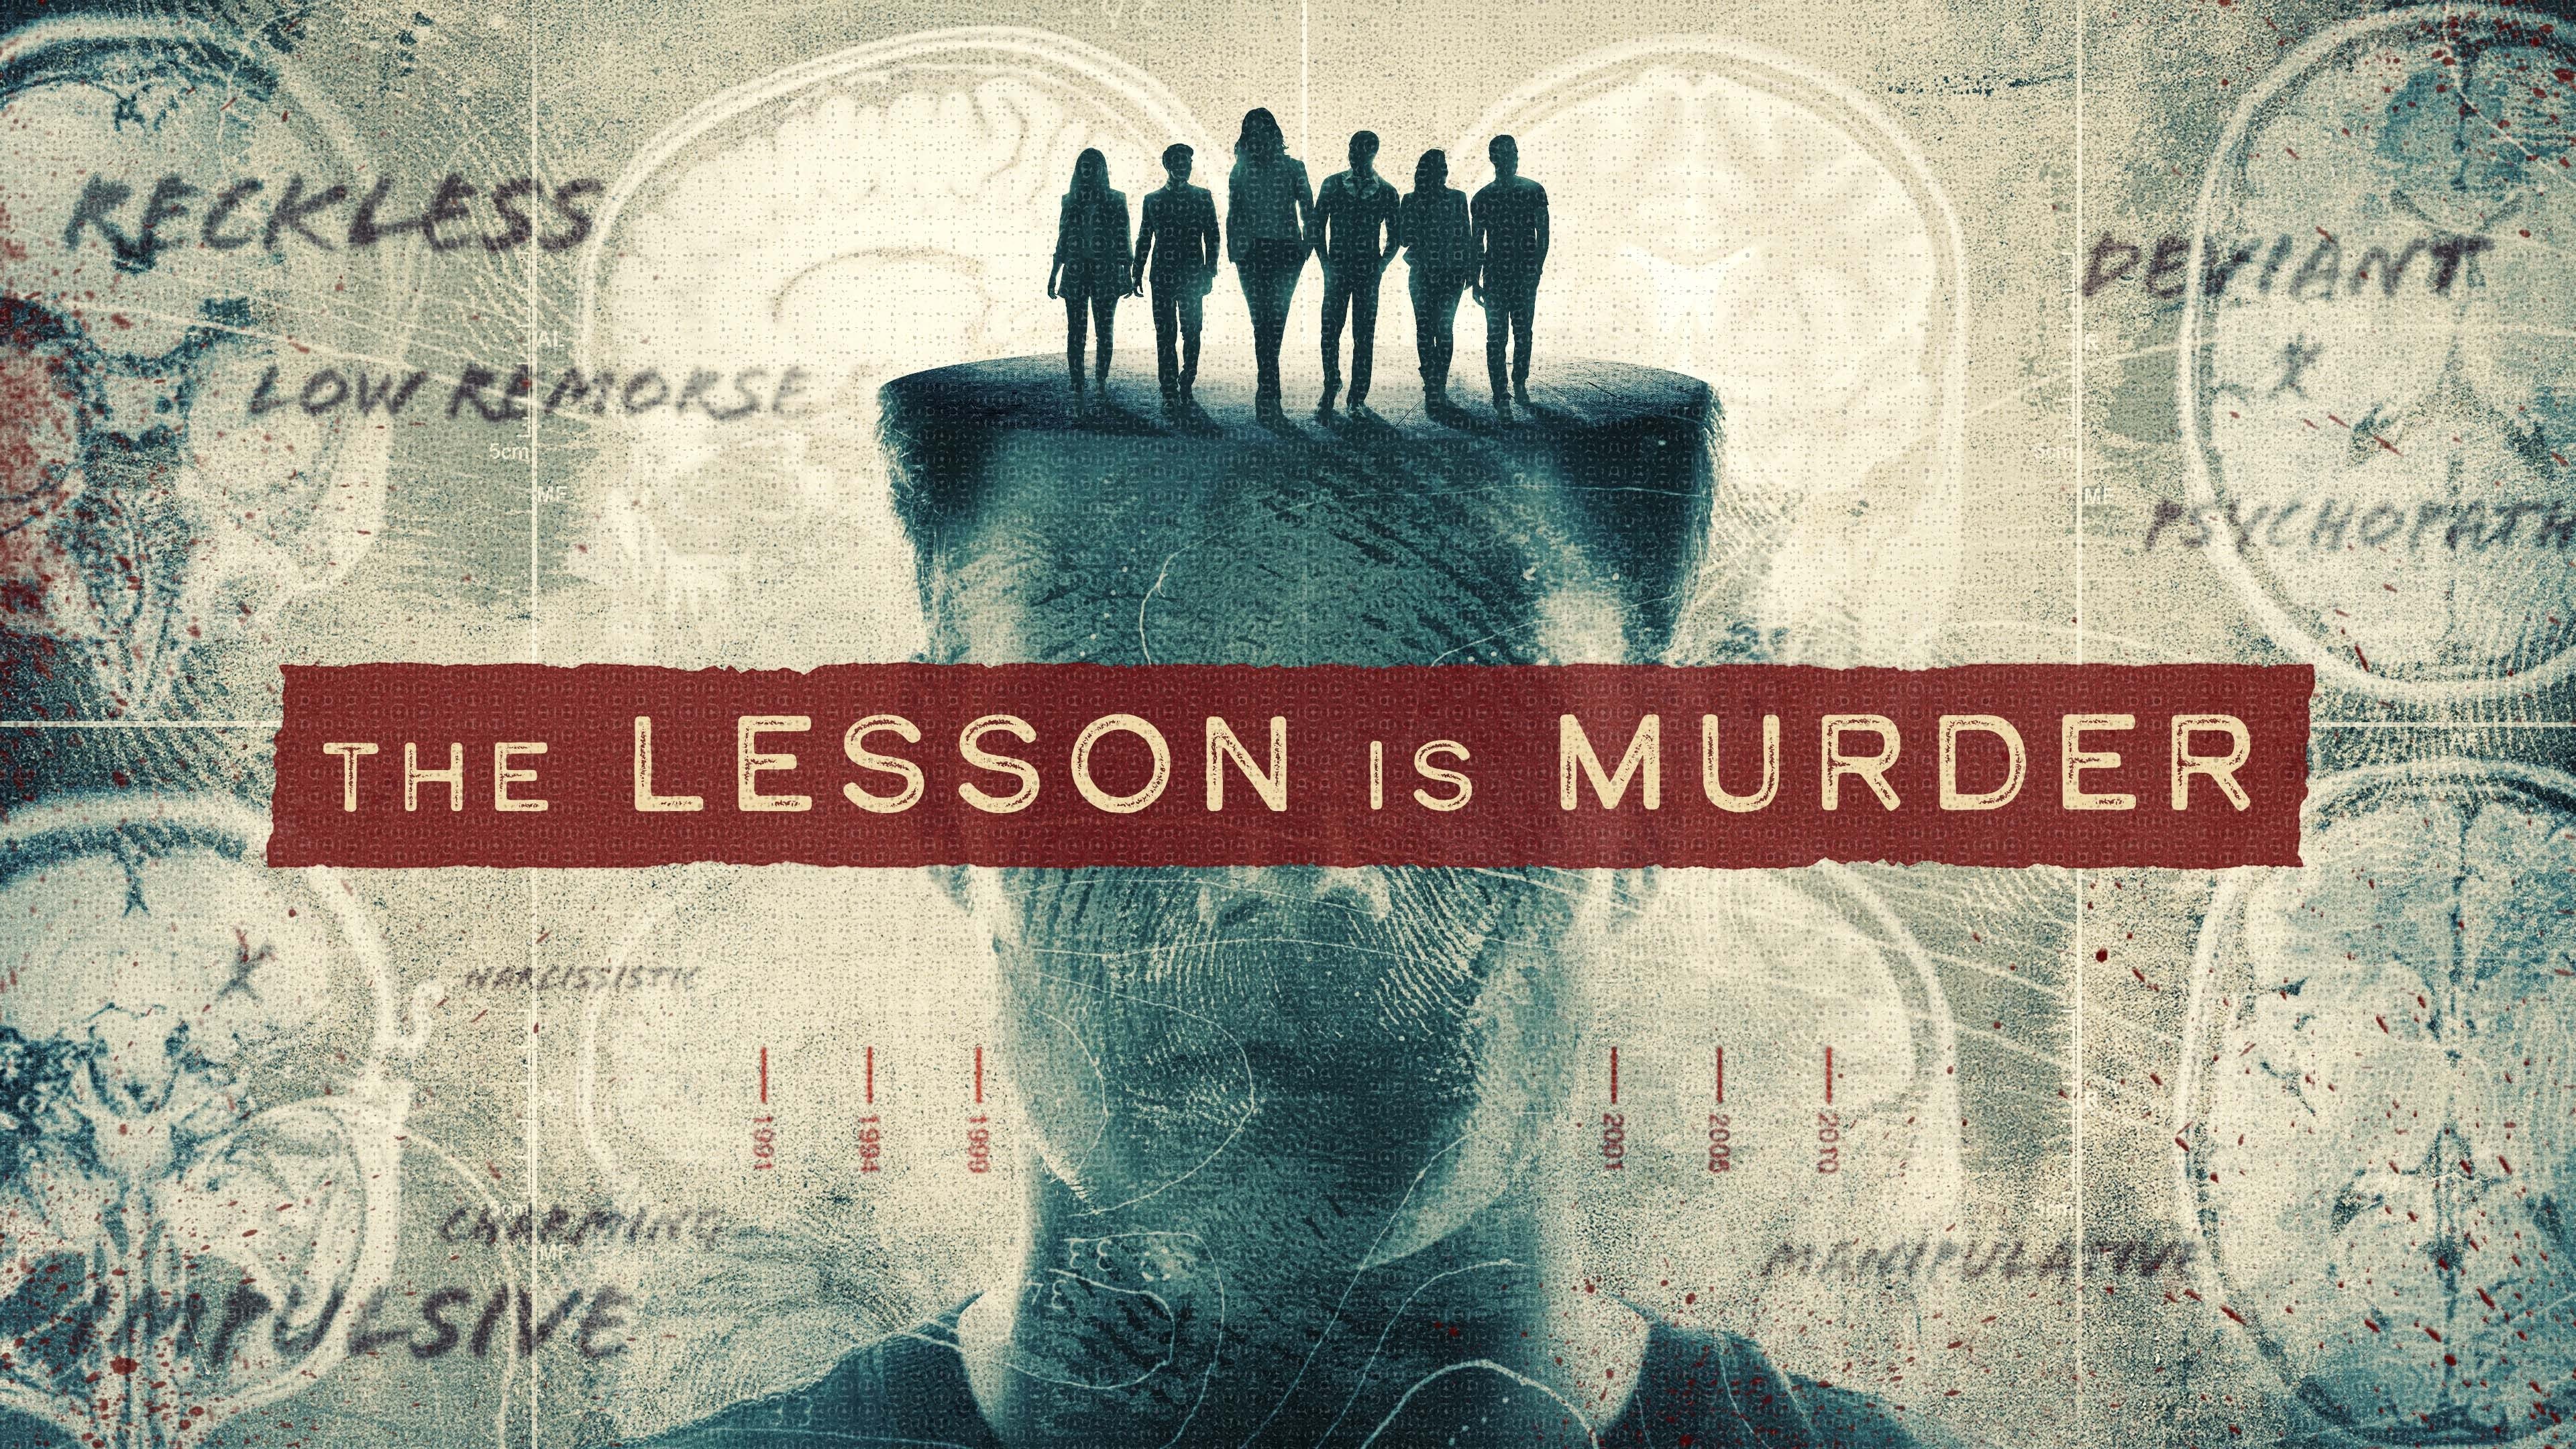 Watch The Jury: Murder Trial | Stream free on Channel 4